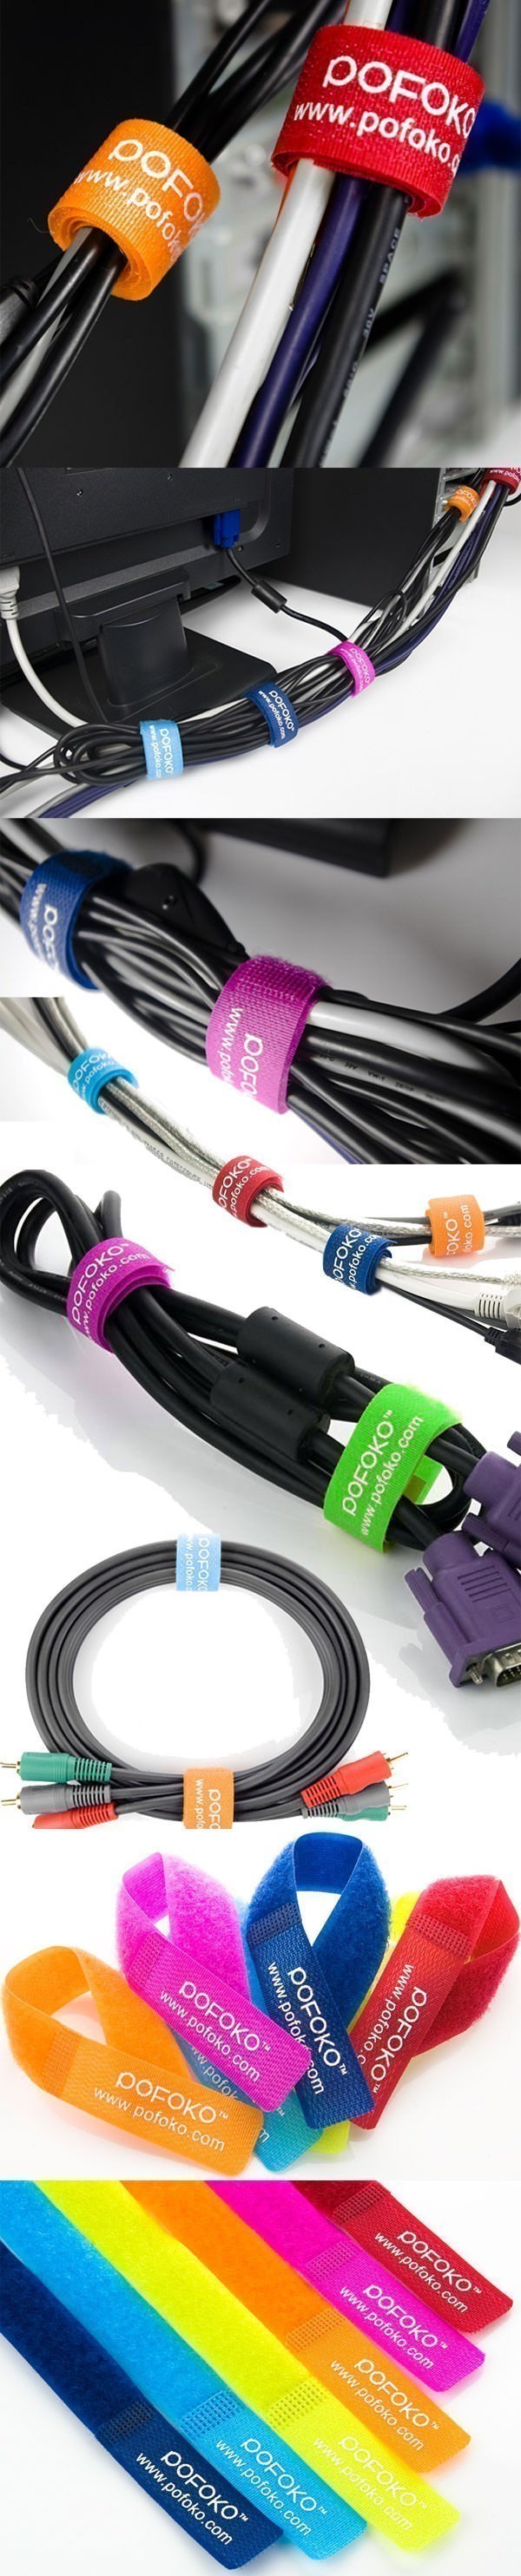 Aurora Series Cable Tie (8 Colors) 